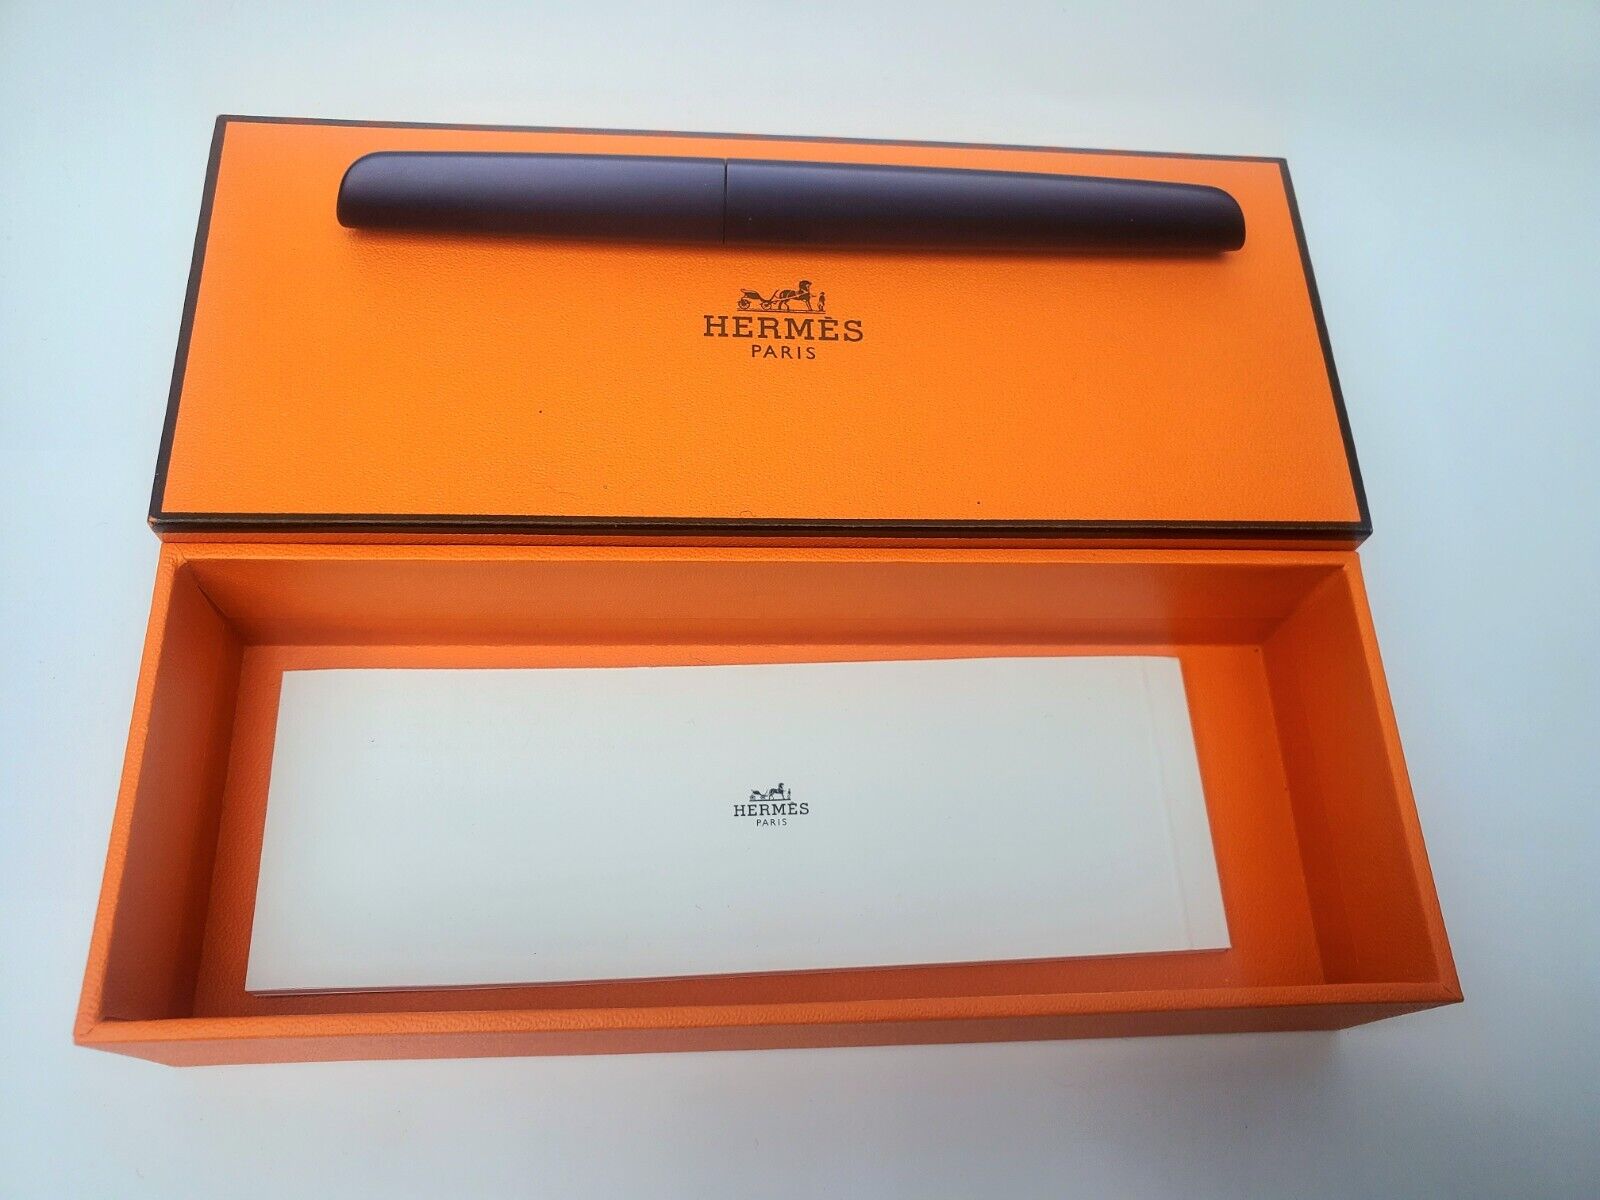 HERMES Nautilus Ballpoint High-end Capless Pen Designed by Marc Newson